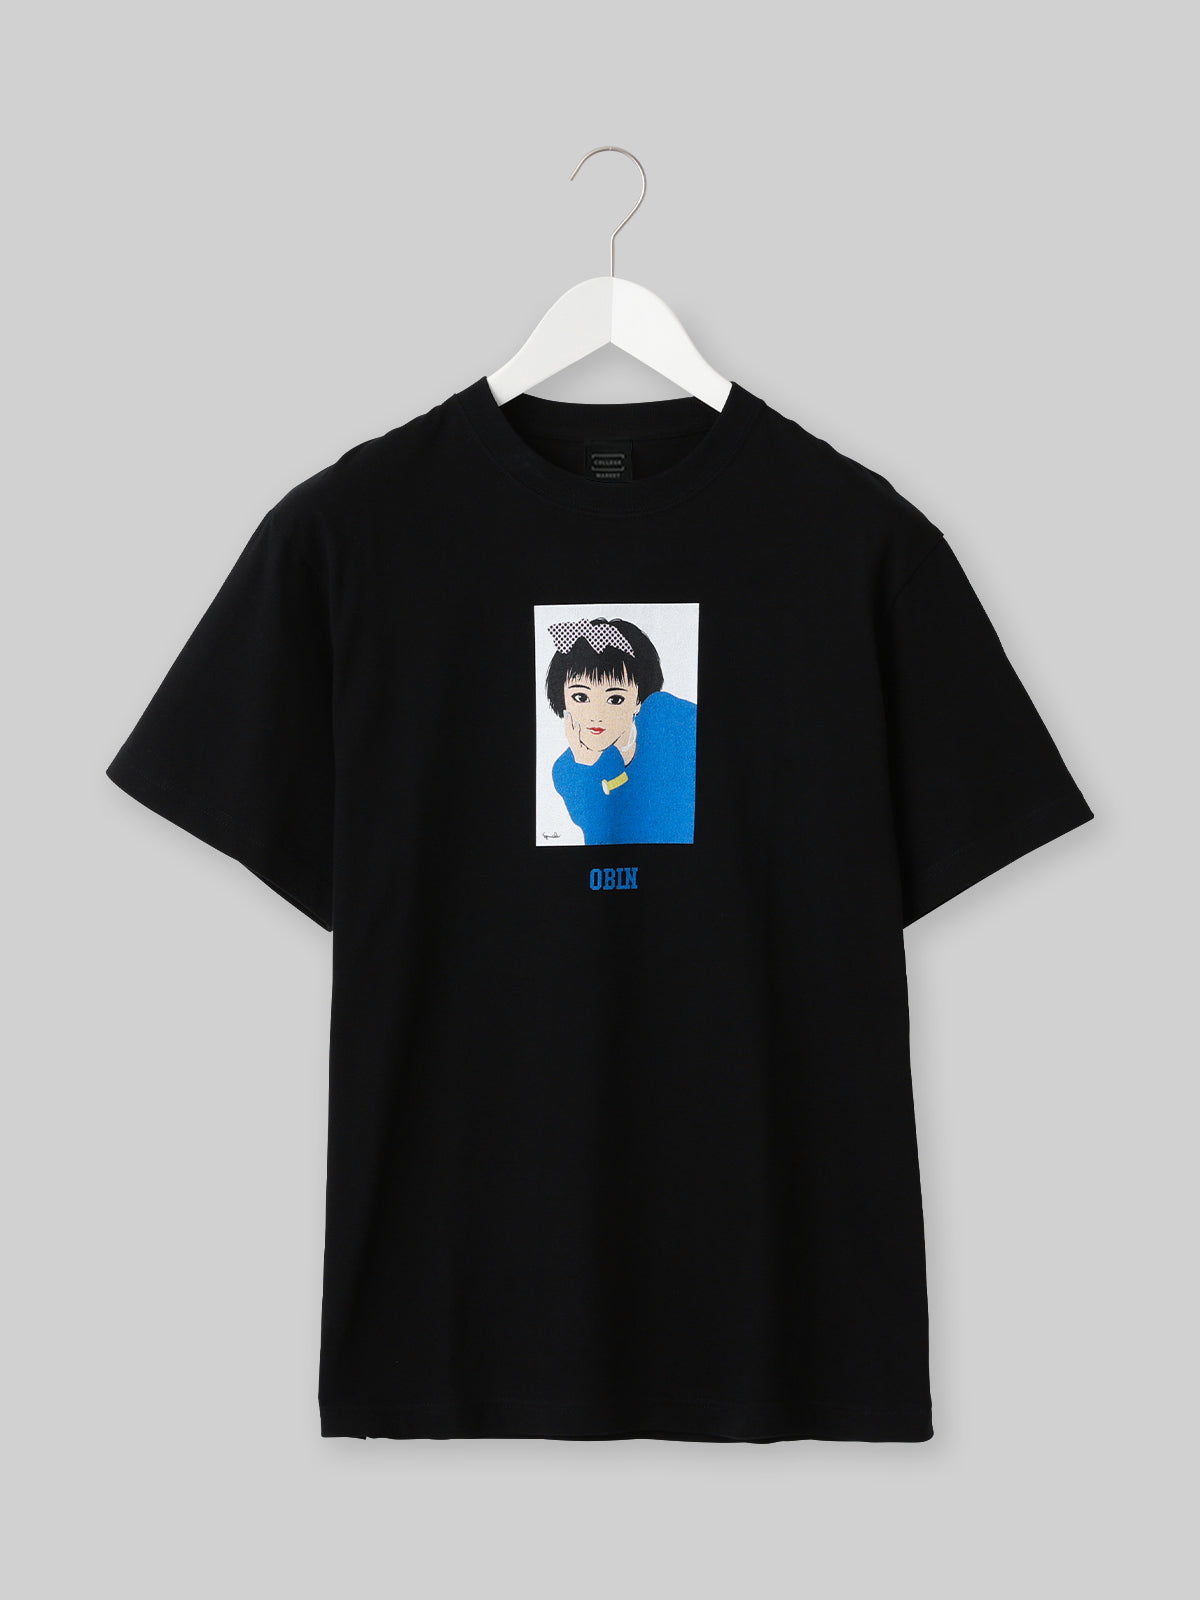 J. F. OBERLIN 江口寿史コラボvol.2 Tシャツ「パパリンコ物語１」 OBLNロゴ ブラック